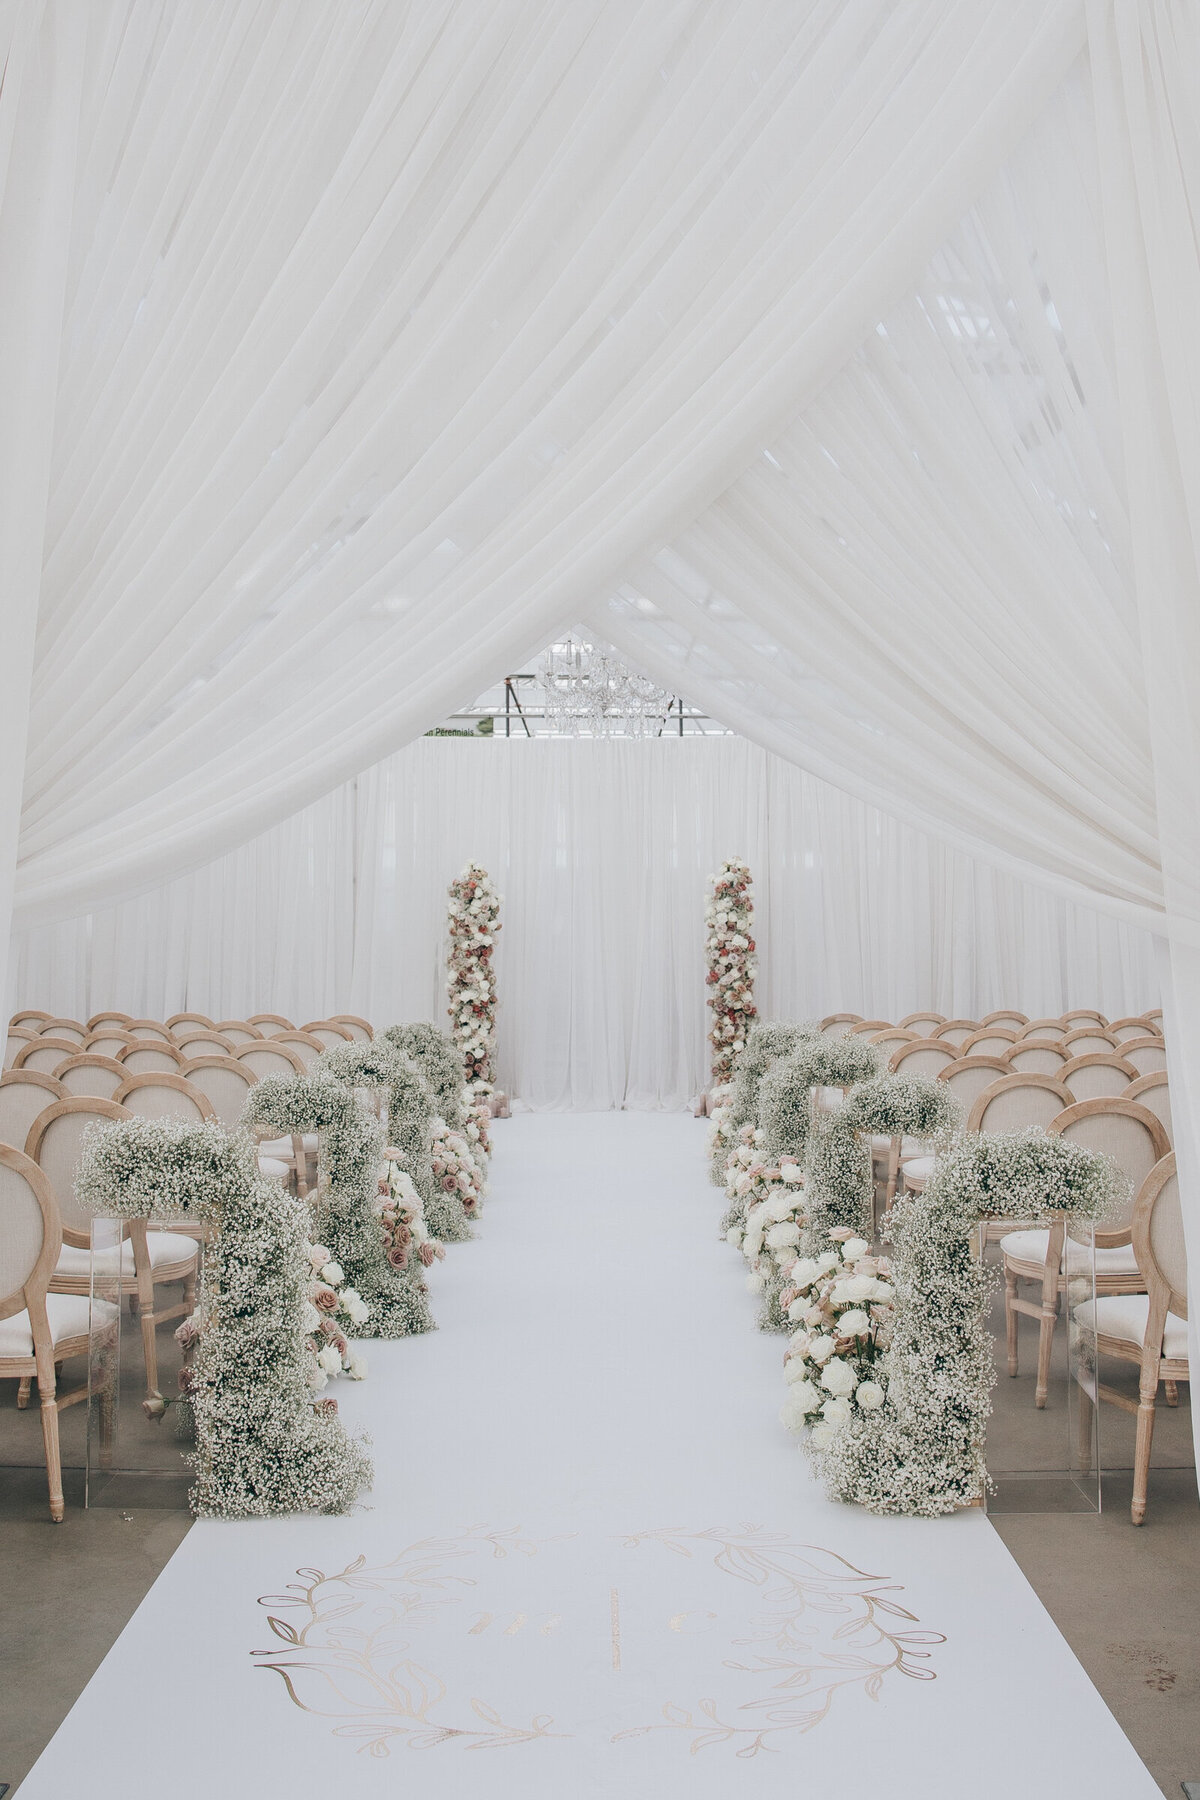 Glamorous white and dusty pink wedding reception